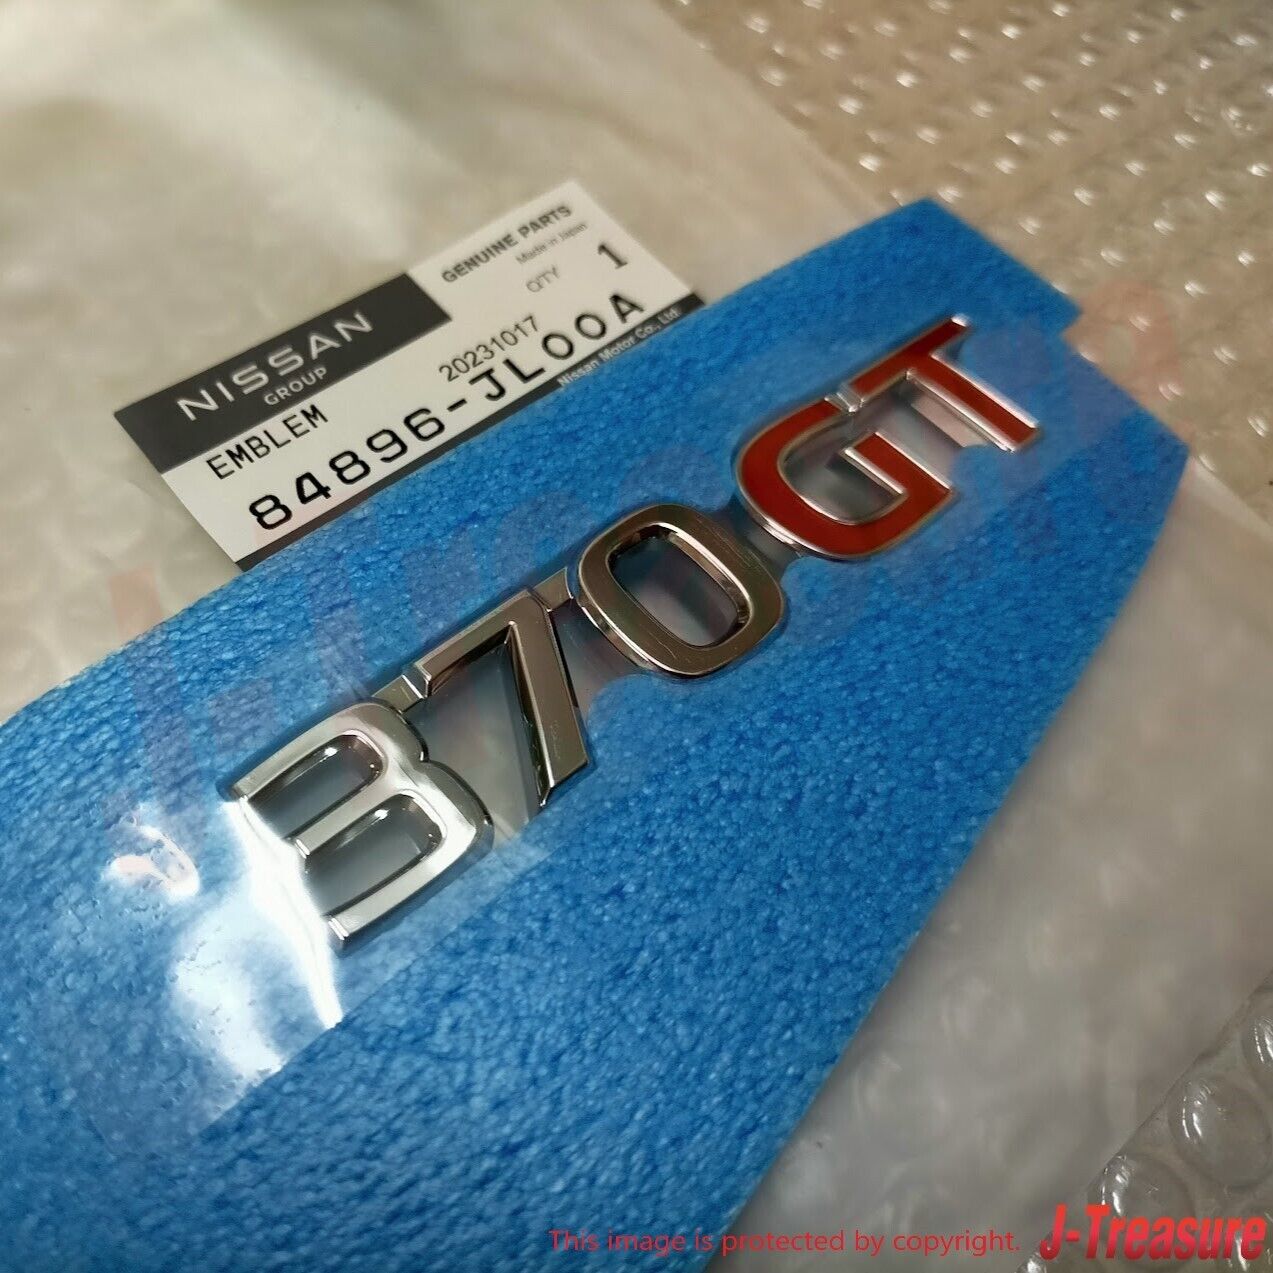 NISSAN INFINITI G37 V36 08-13 Genuine Trunk Lid "370GT" Emblem 84896-JL00A OEM